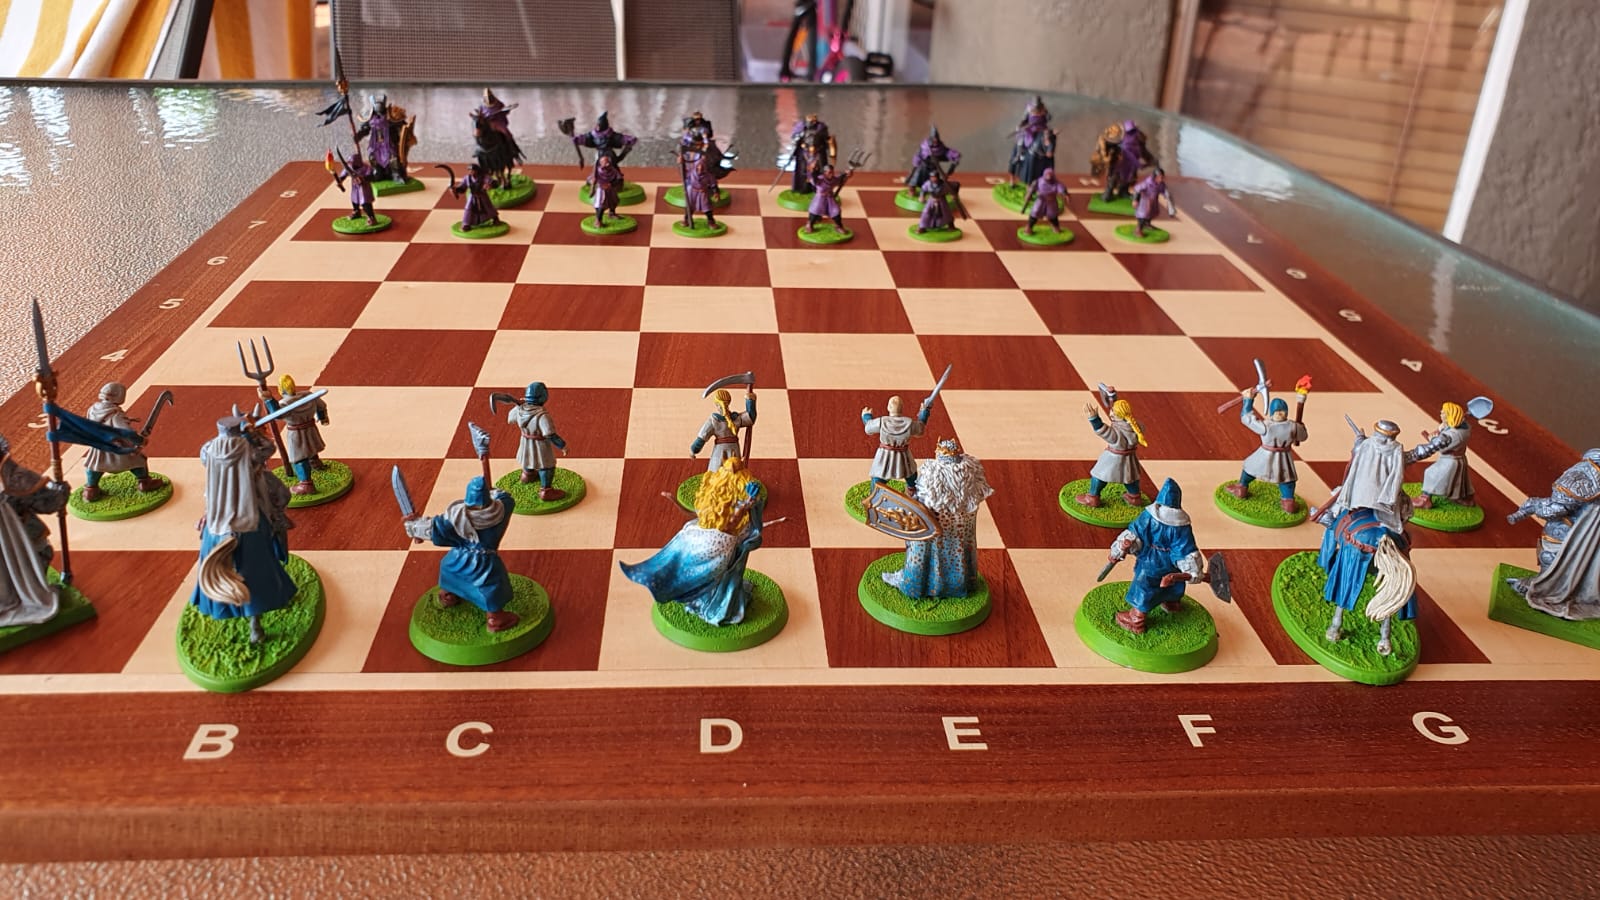 Custom Chess Sets